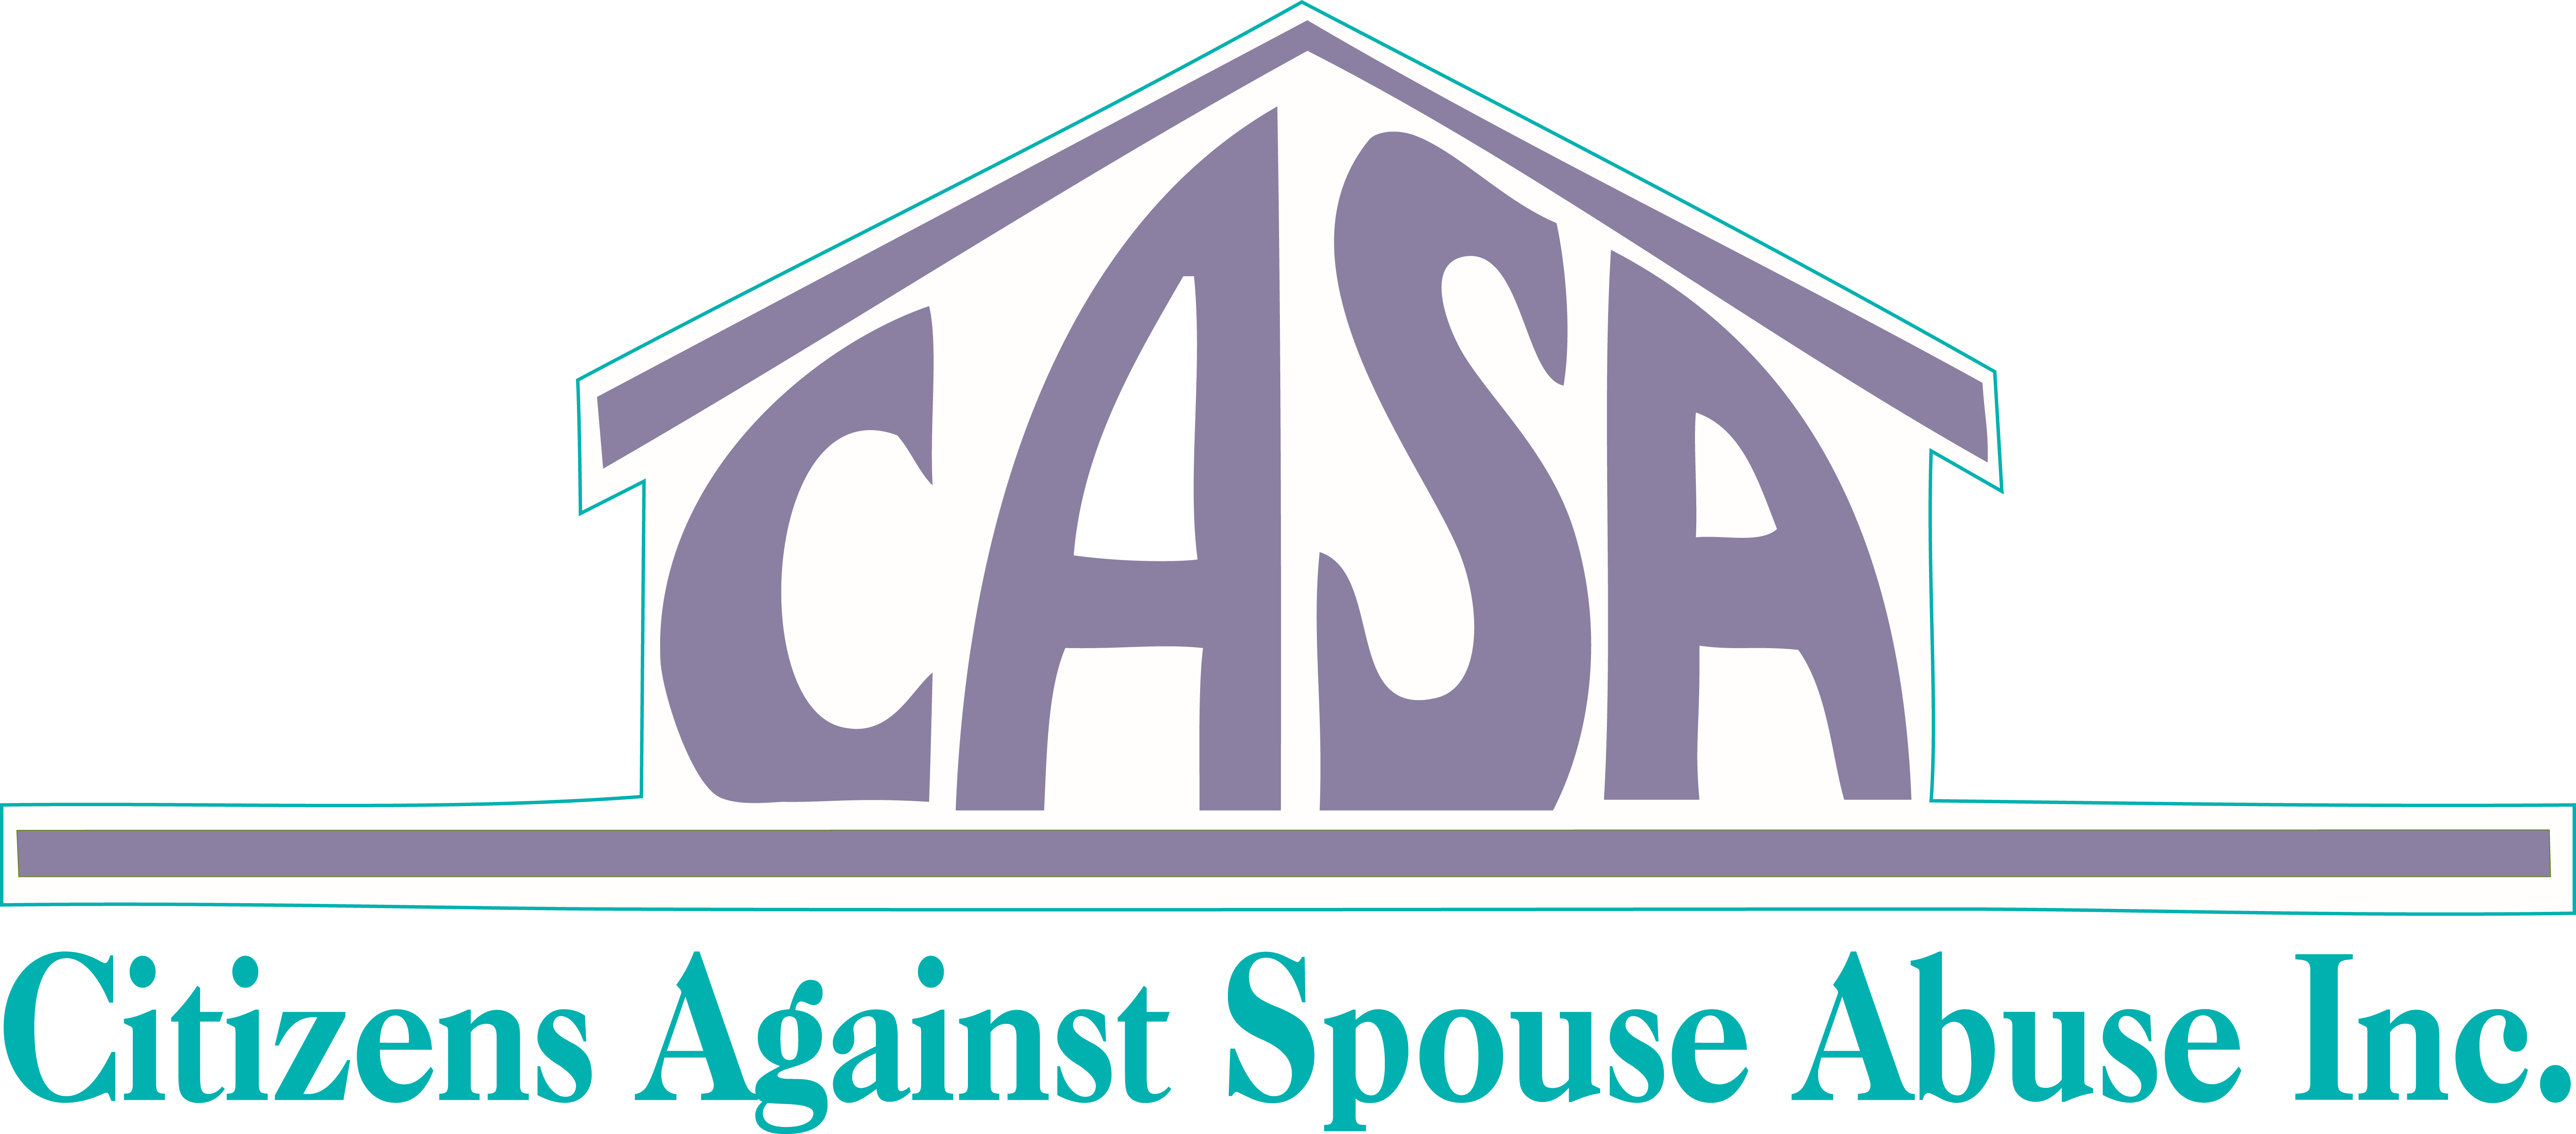 Casa Logo - HOME